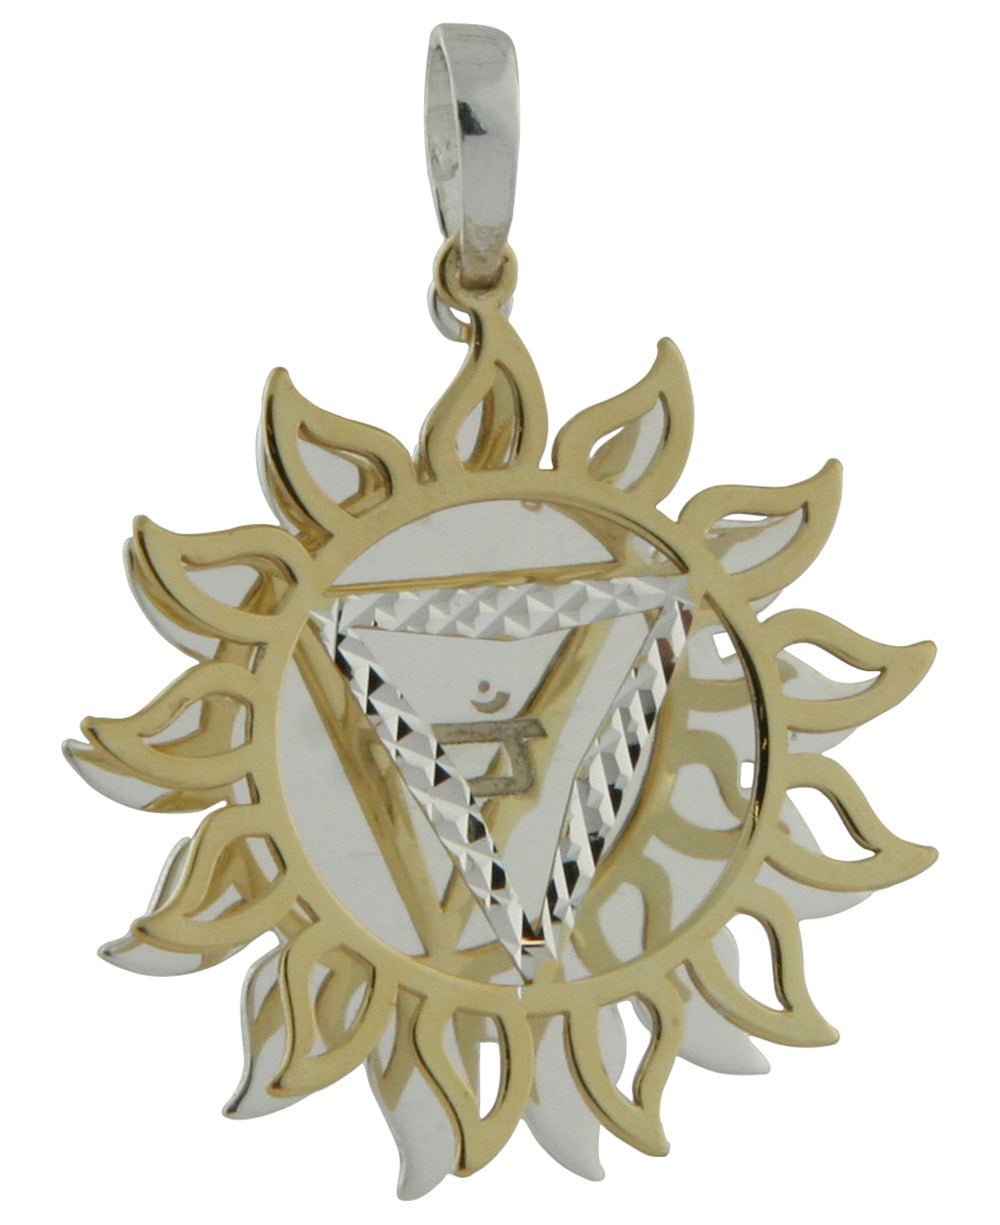 Chakra Jewelry Pendants in Silver and Gold Layered Style - Pendant Solar Plexus Chakra